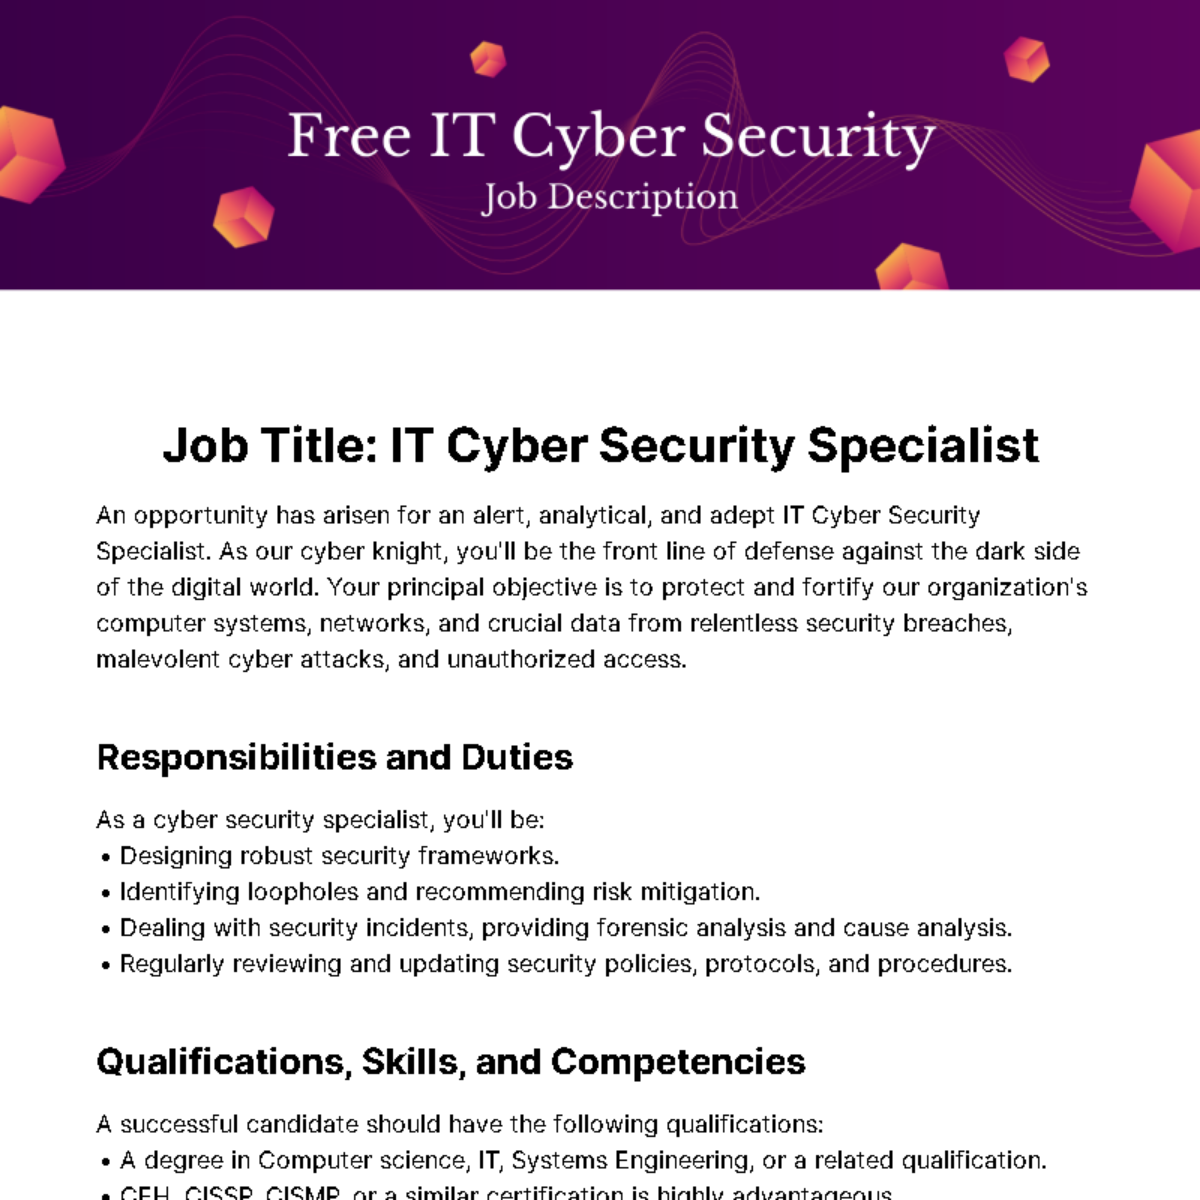 Free IT Cyber Security Job Description Template